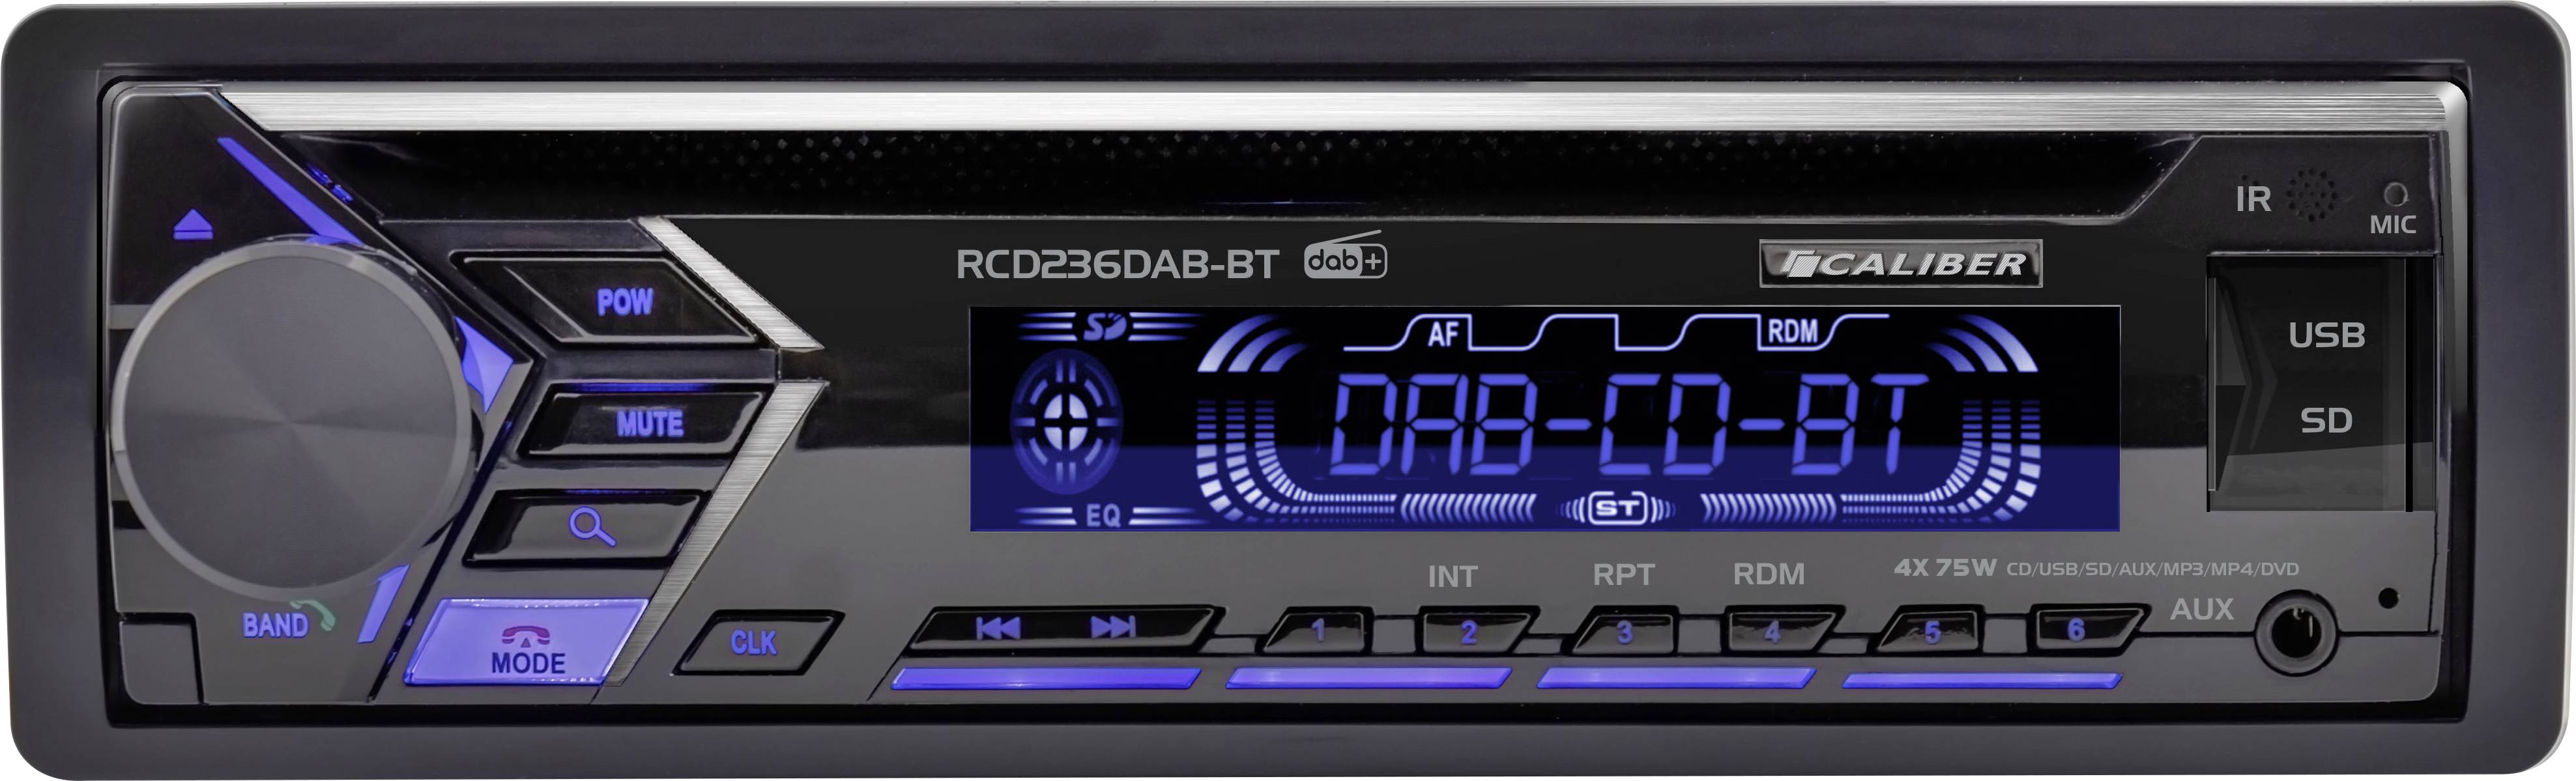 Caliber RCD237DAB-BT - Autoradio - Garantie 3 ans LDLC